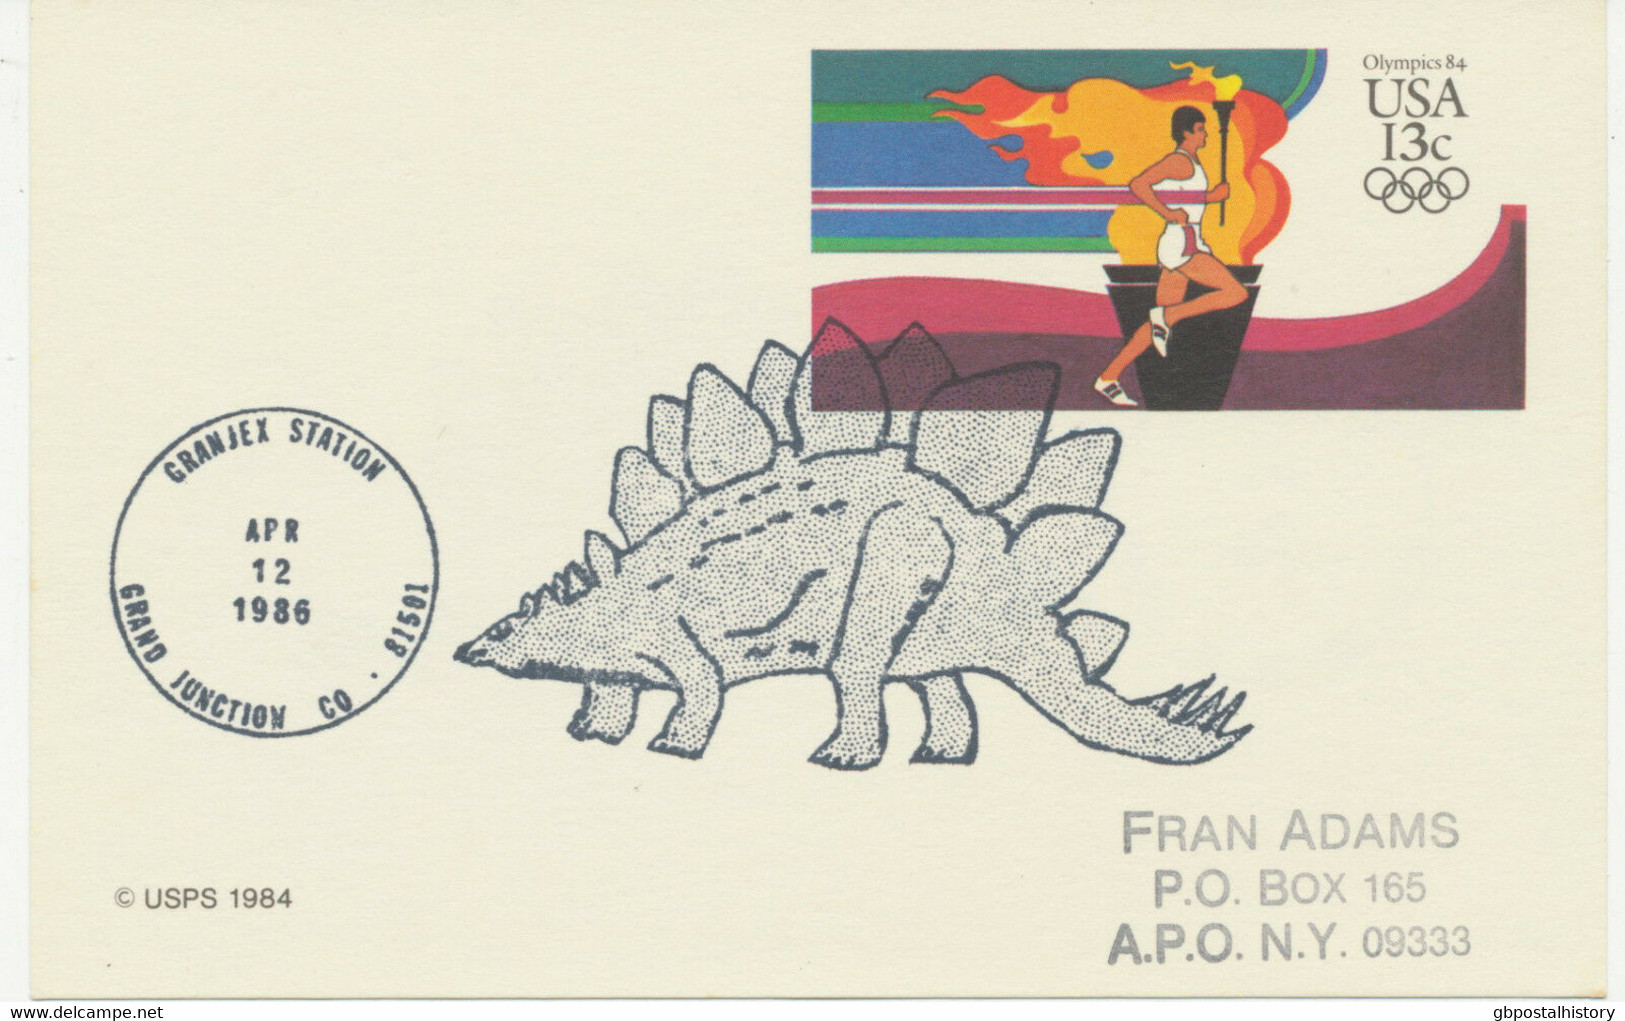 USA 1986, 13 C Olympics 84 Postal Stationery Postcard Rare Special DINOSAUR GRANJEX STATION / GRAND JUNCTION CO – 81501 - 1981-00